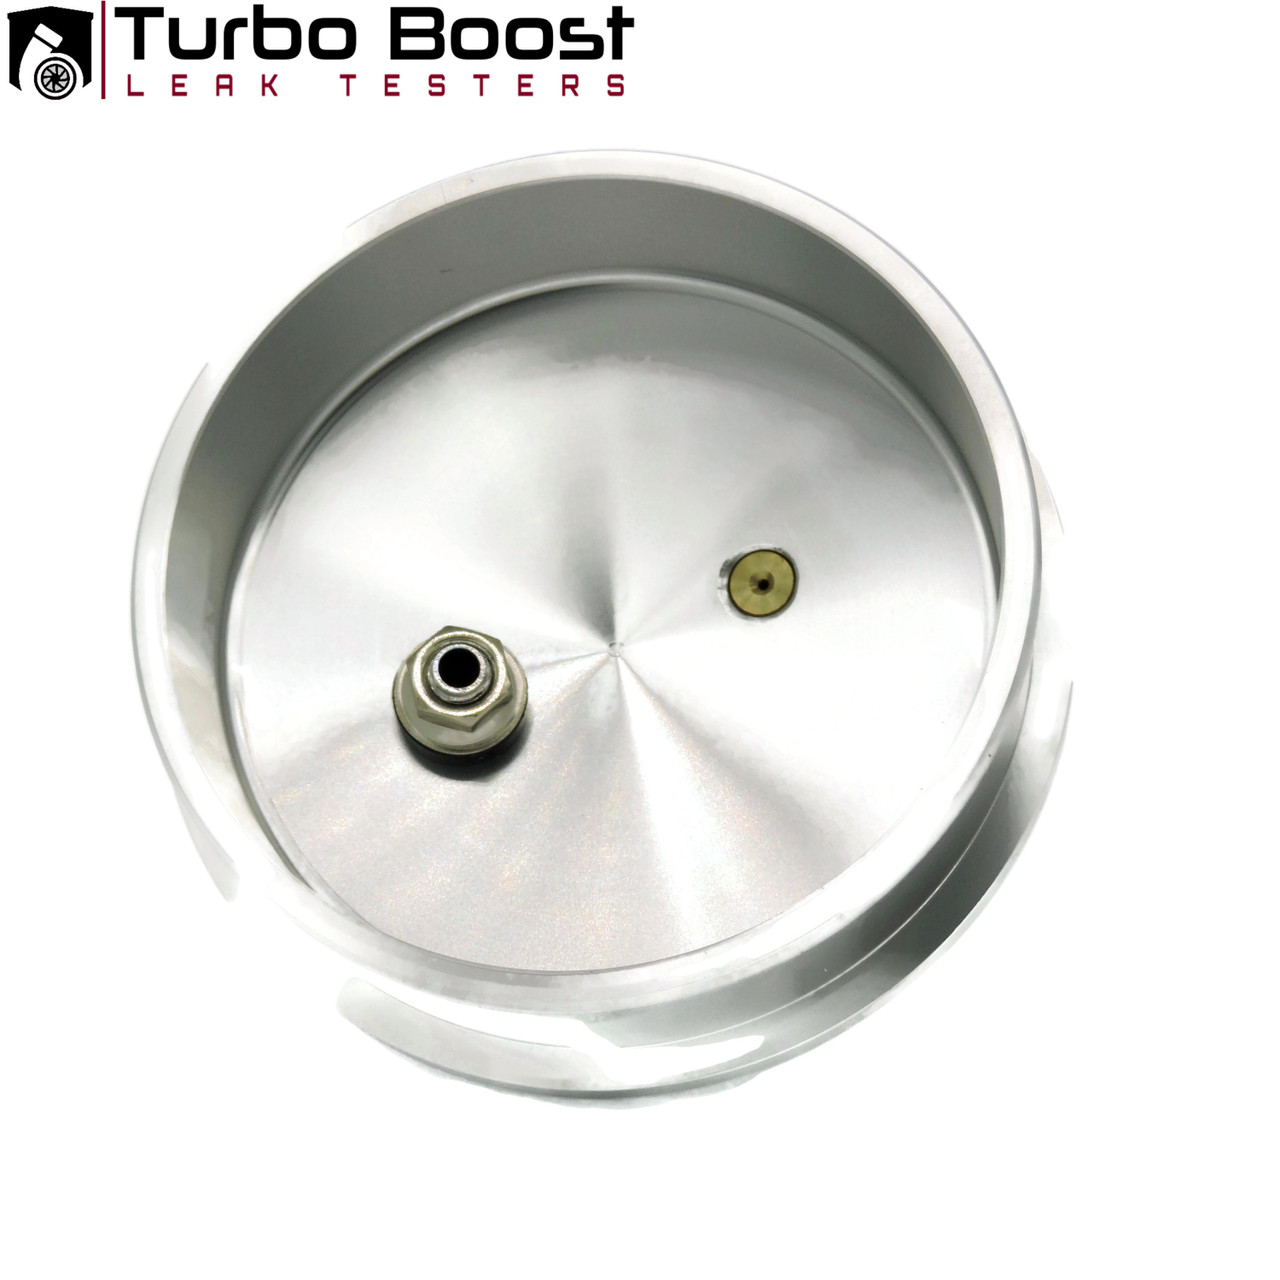 5.5 Pro-Kit Turbo Boost Leak Tester - Billet 6061 Aluminum - TURBO BOOST  LEAK TESTERS